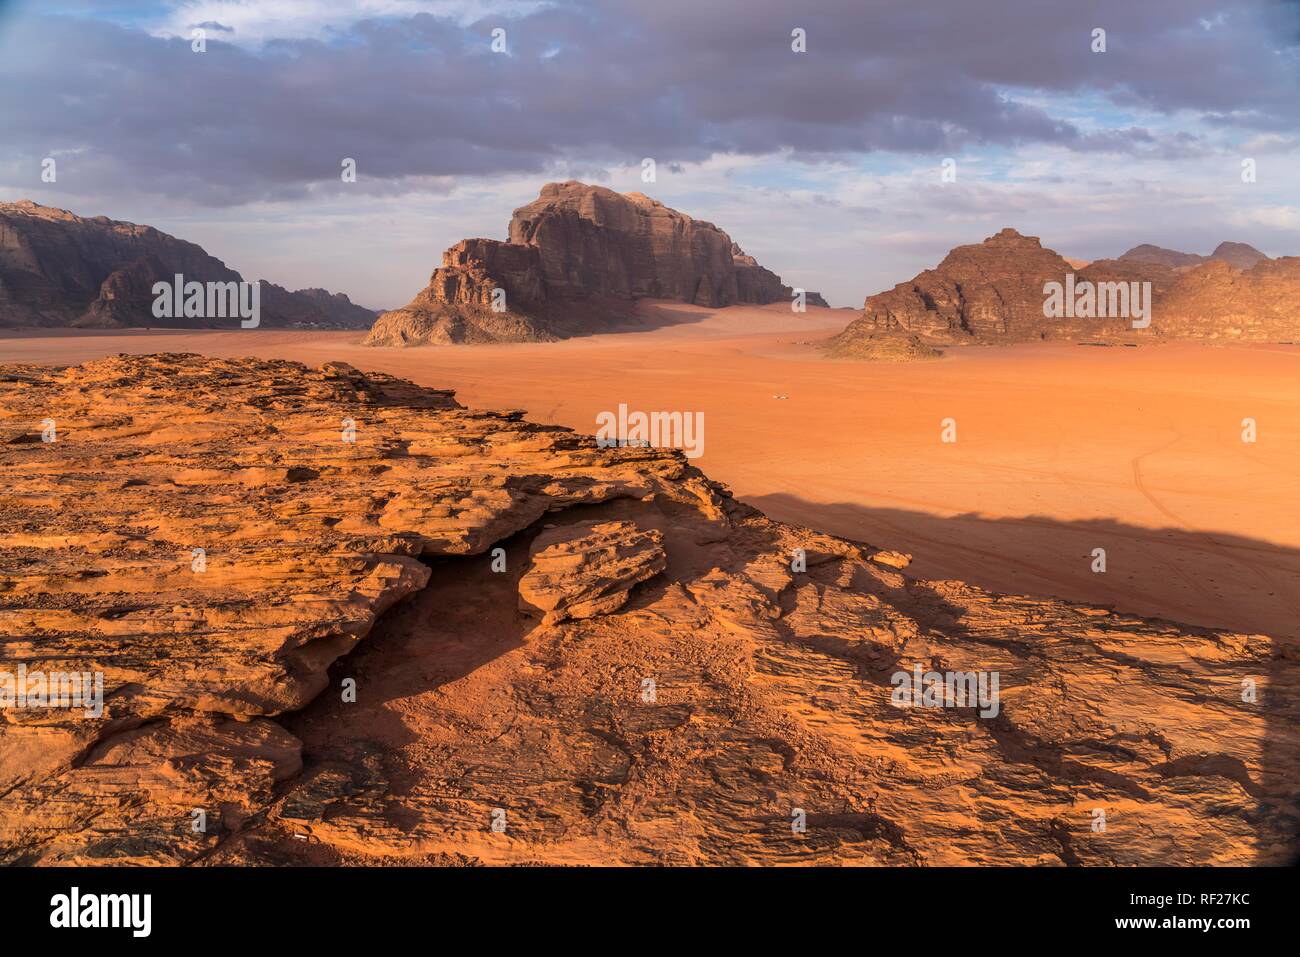 Landscape with rocks in the desert Wadi Rum, Jordan Stock Photo